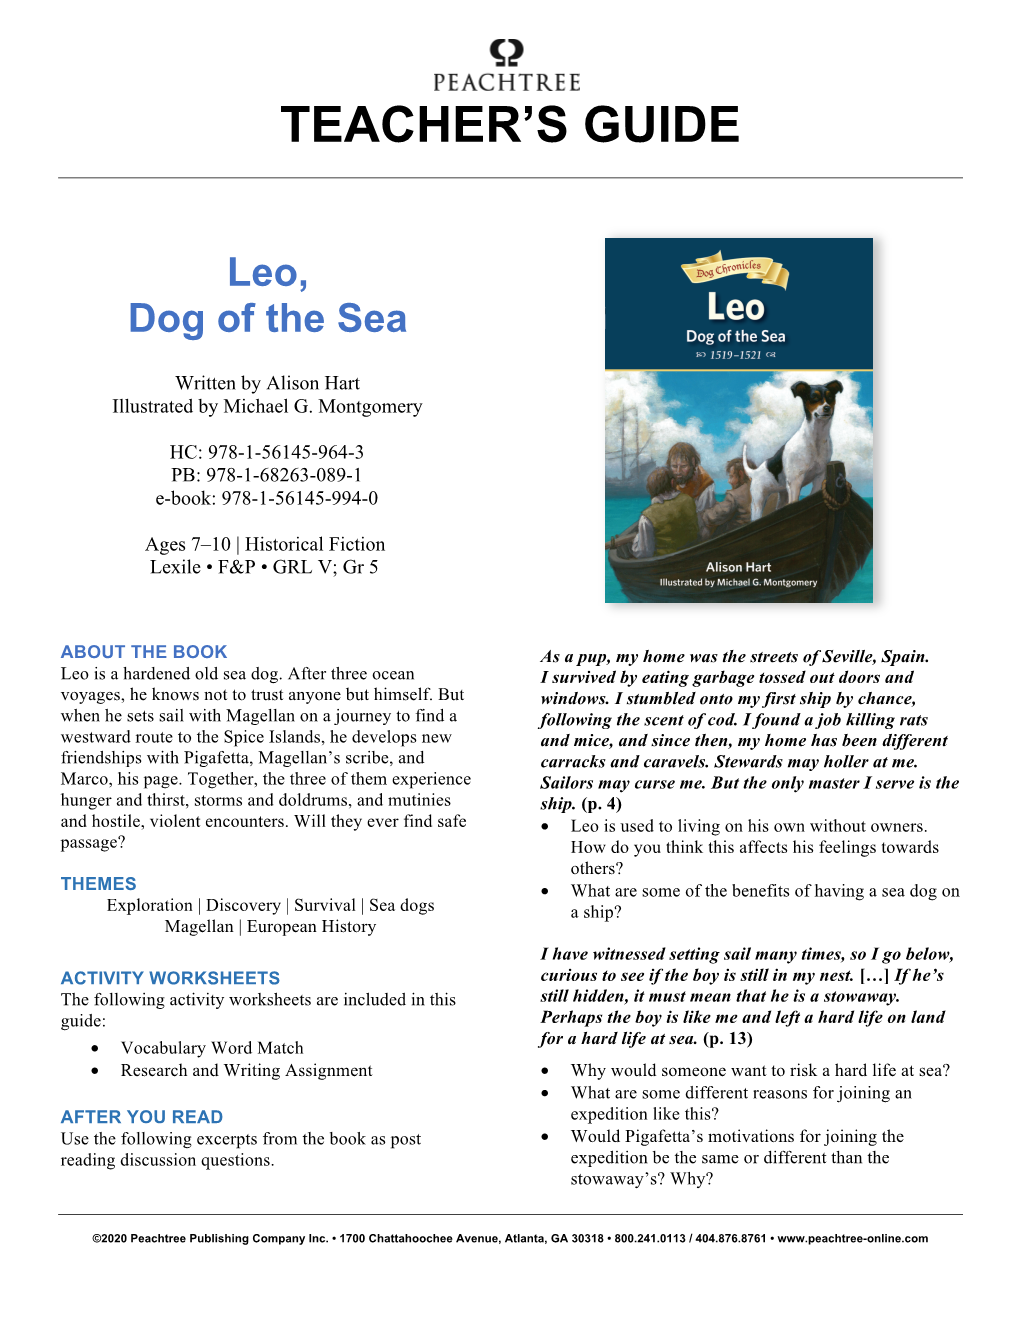 Leo, Dog of the Sea Teacher's Guide